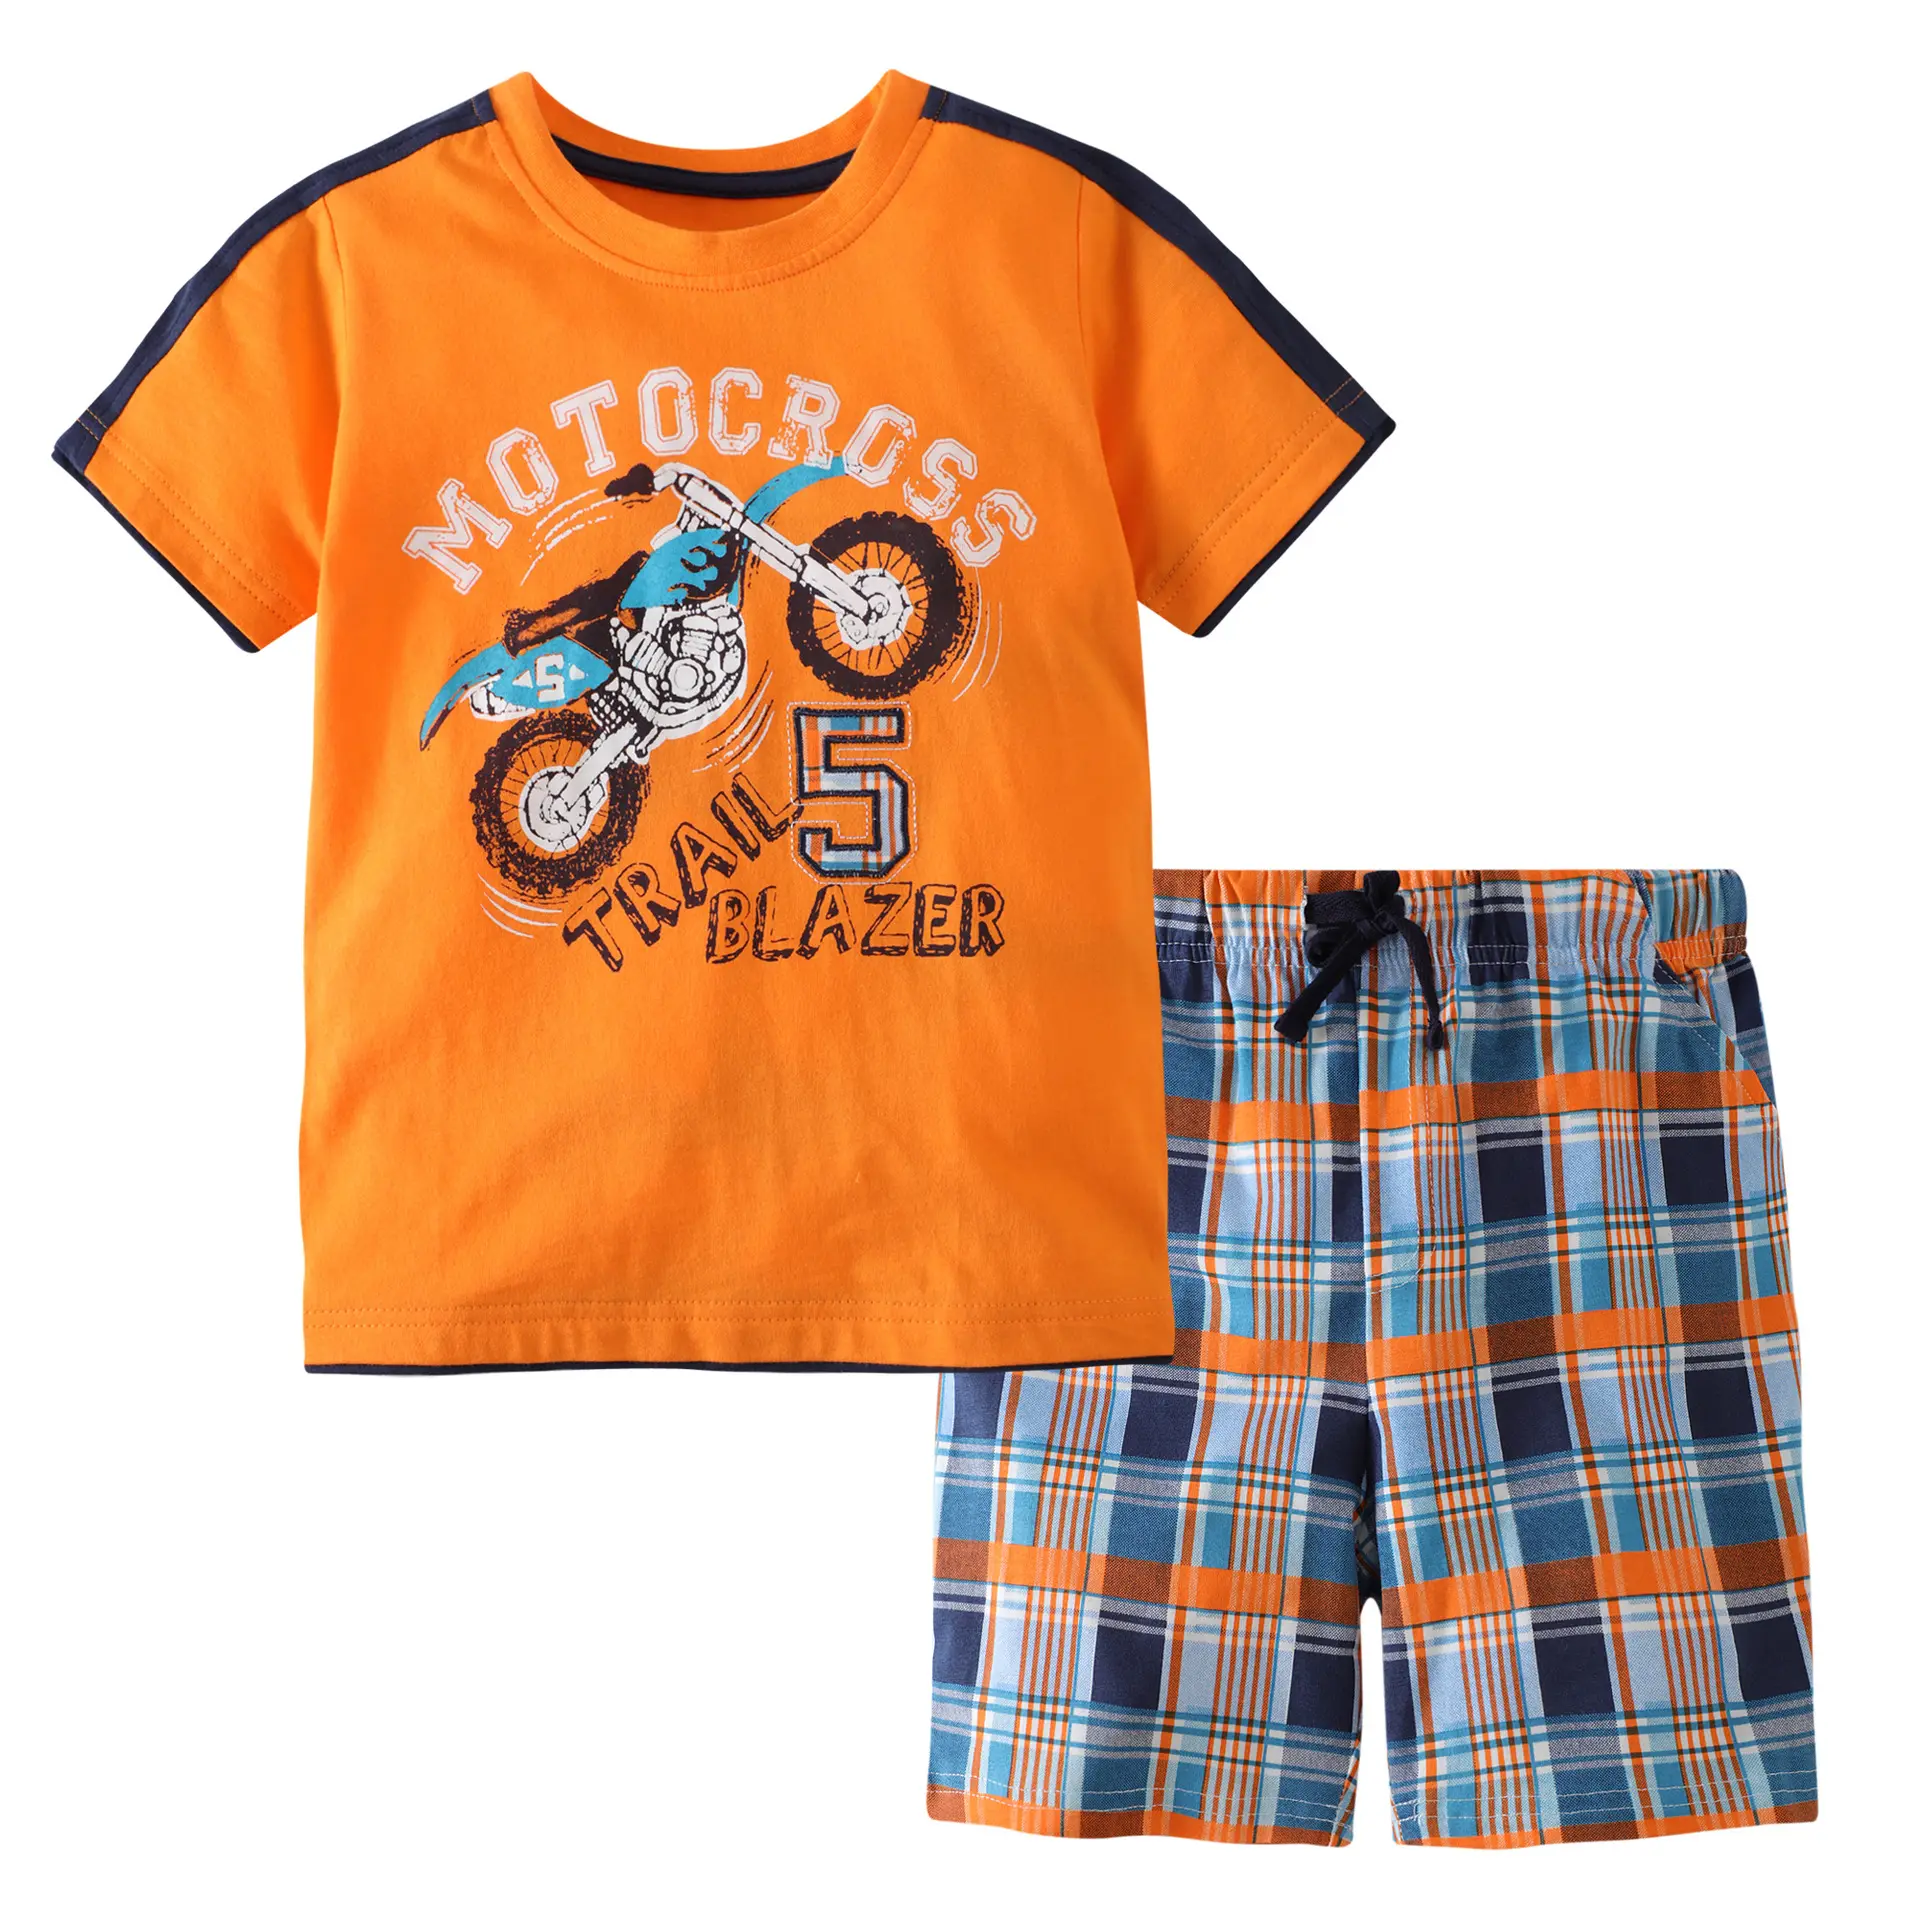 Kids Boutique Clothing Sets Boys Summer Cotton Cartoon Print Short Sleeve T-Shirt Shorts Set